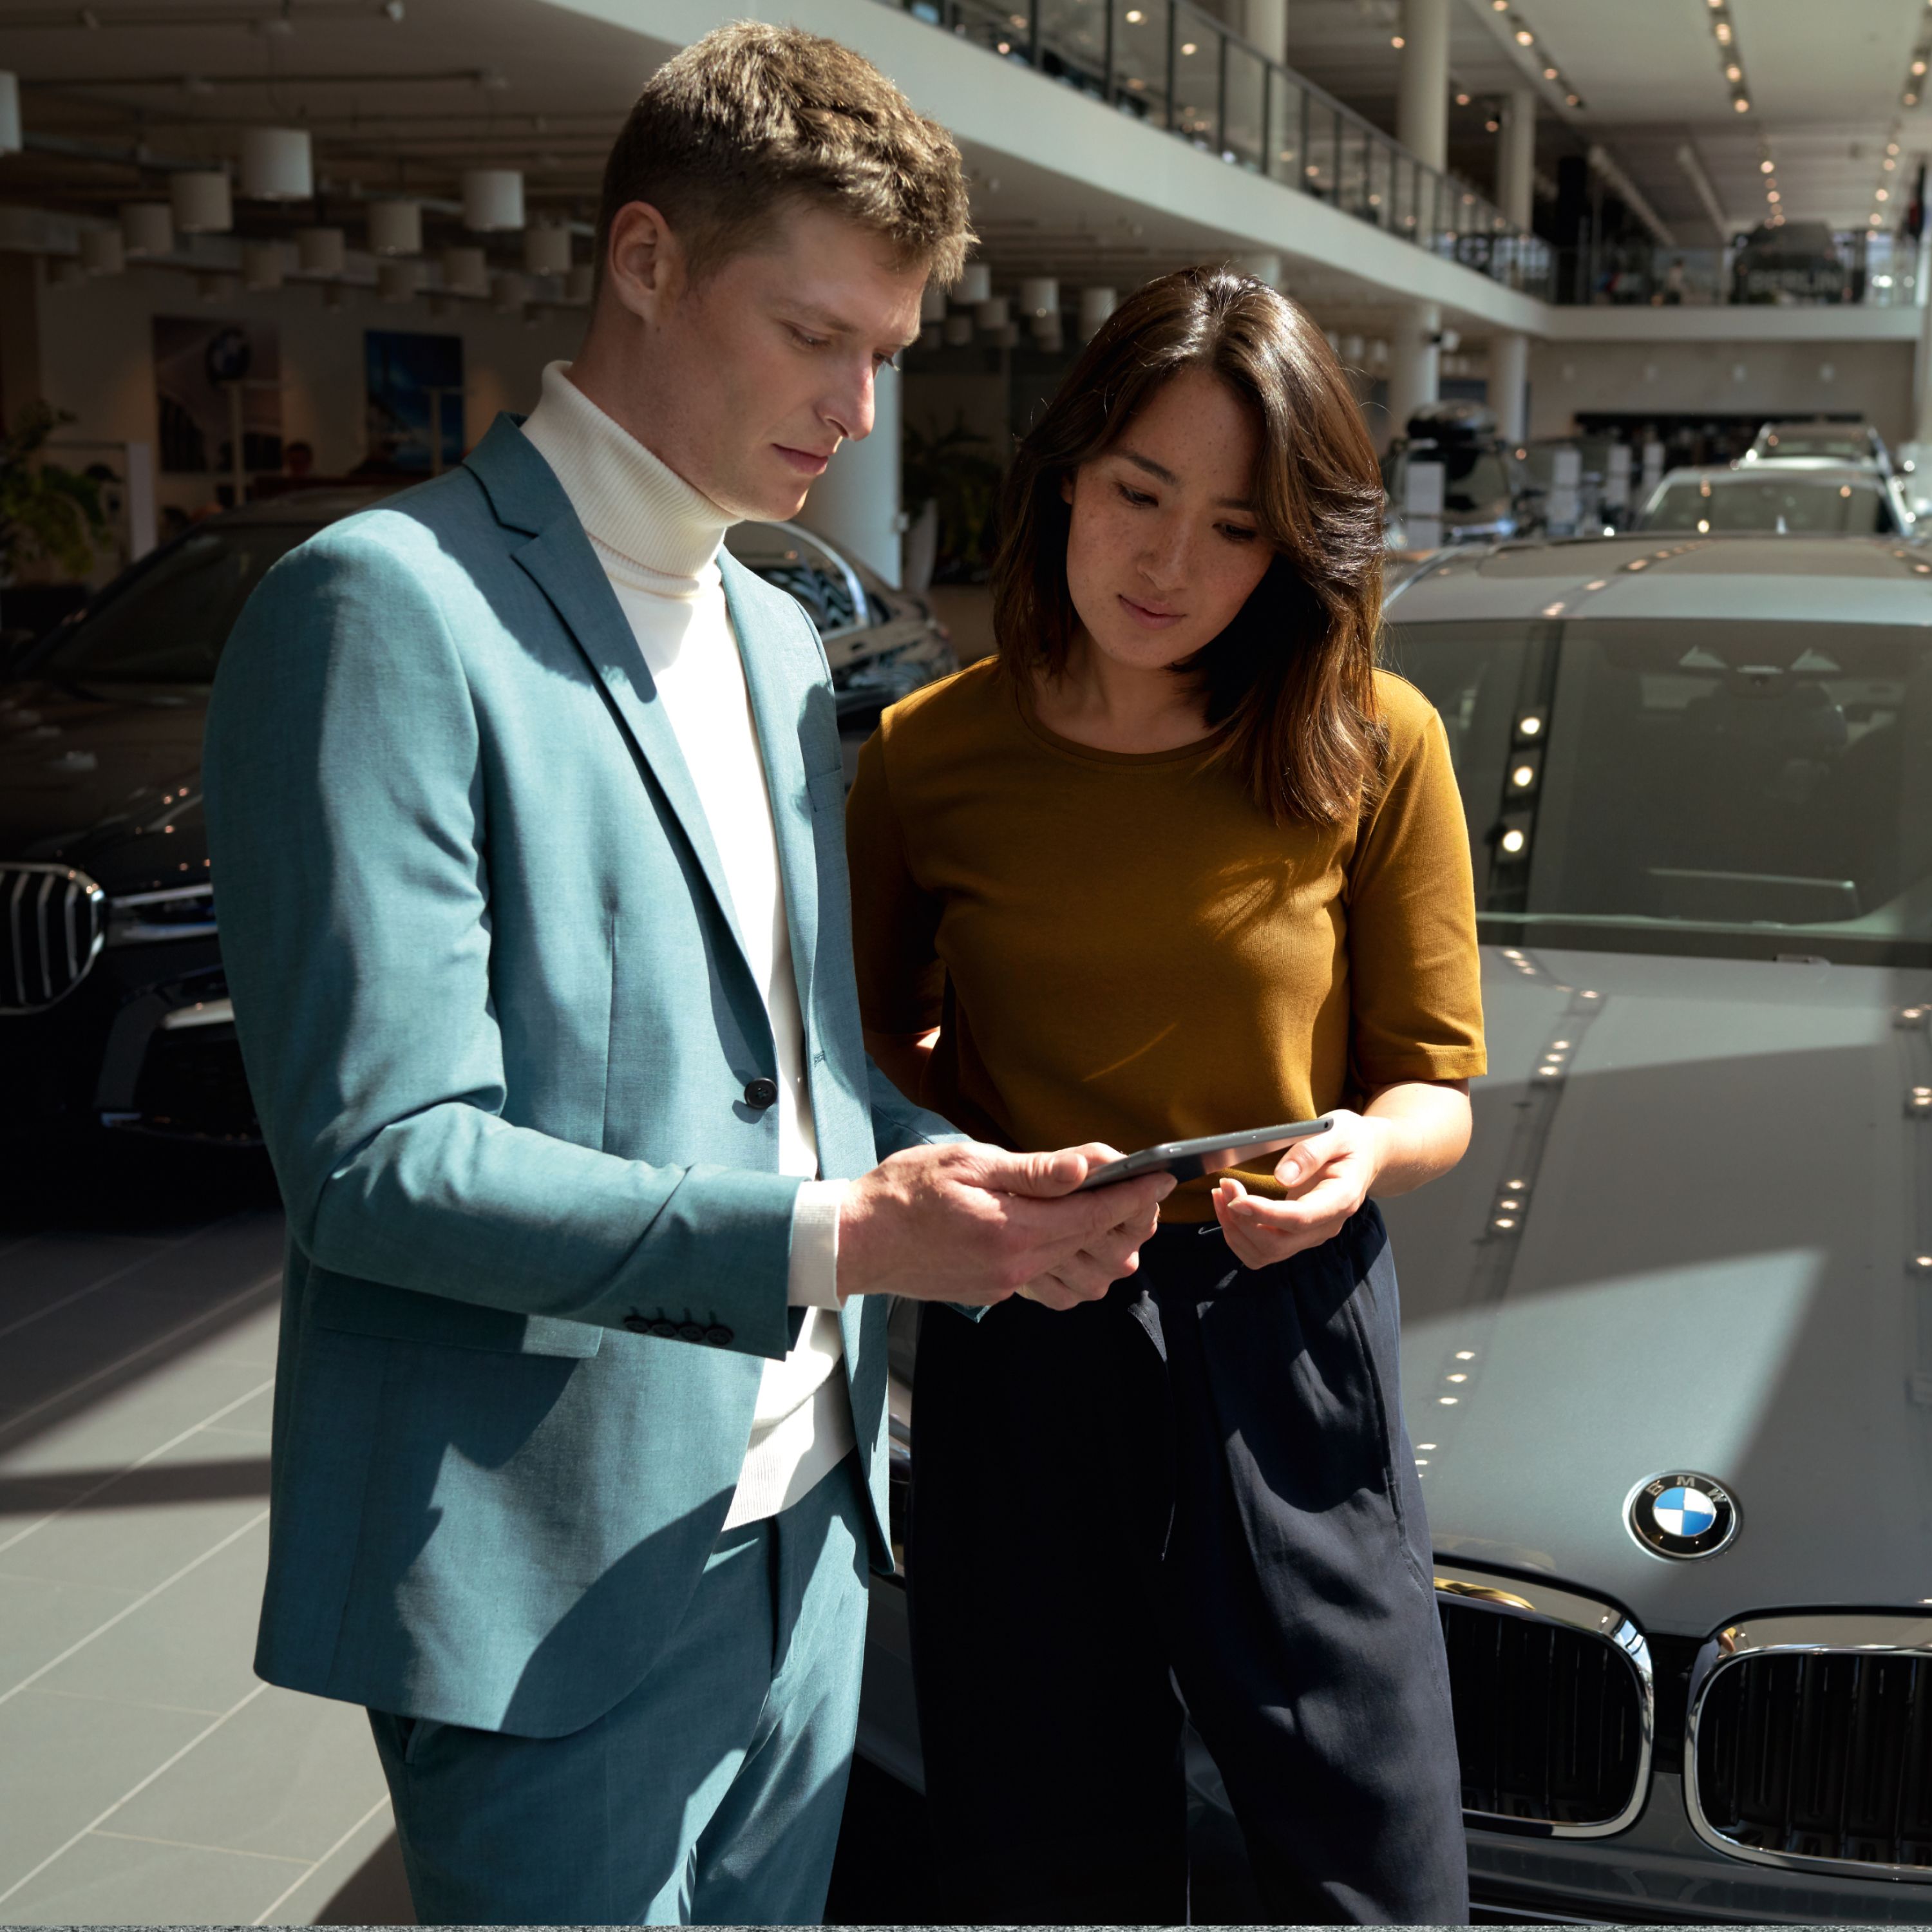 BMW Plug-in-Hybrid BMW Service Partner